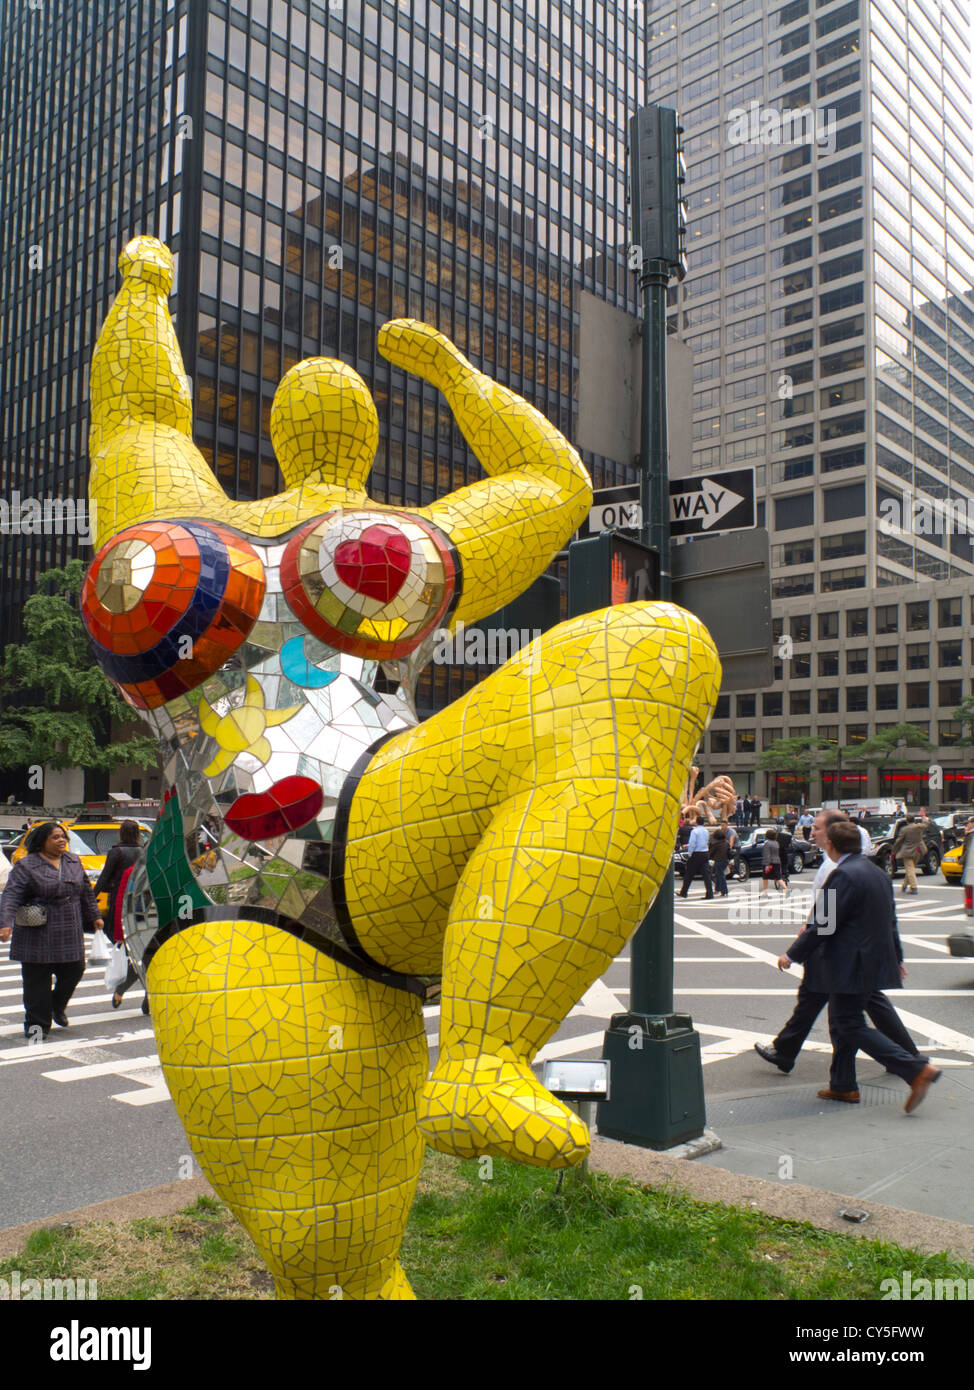 Public art sculpture on Park Avenue in NYC Stock Photo